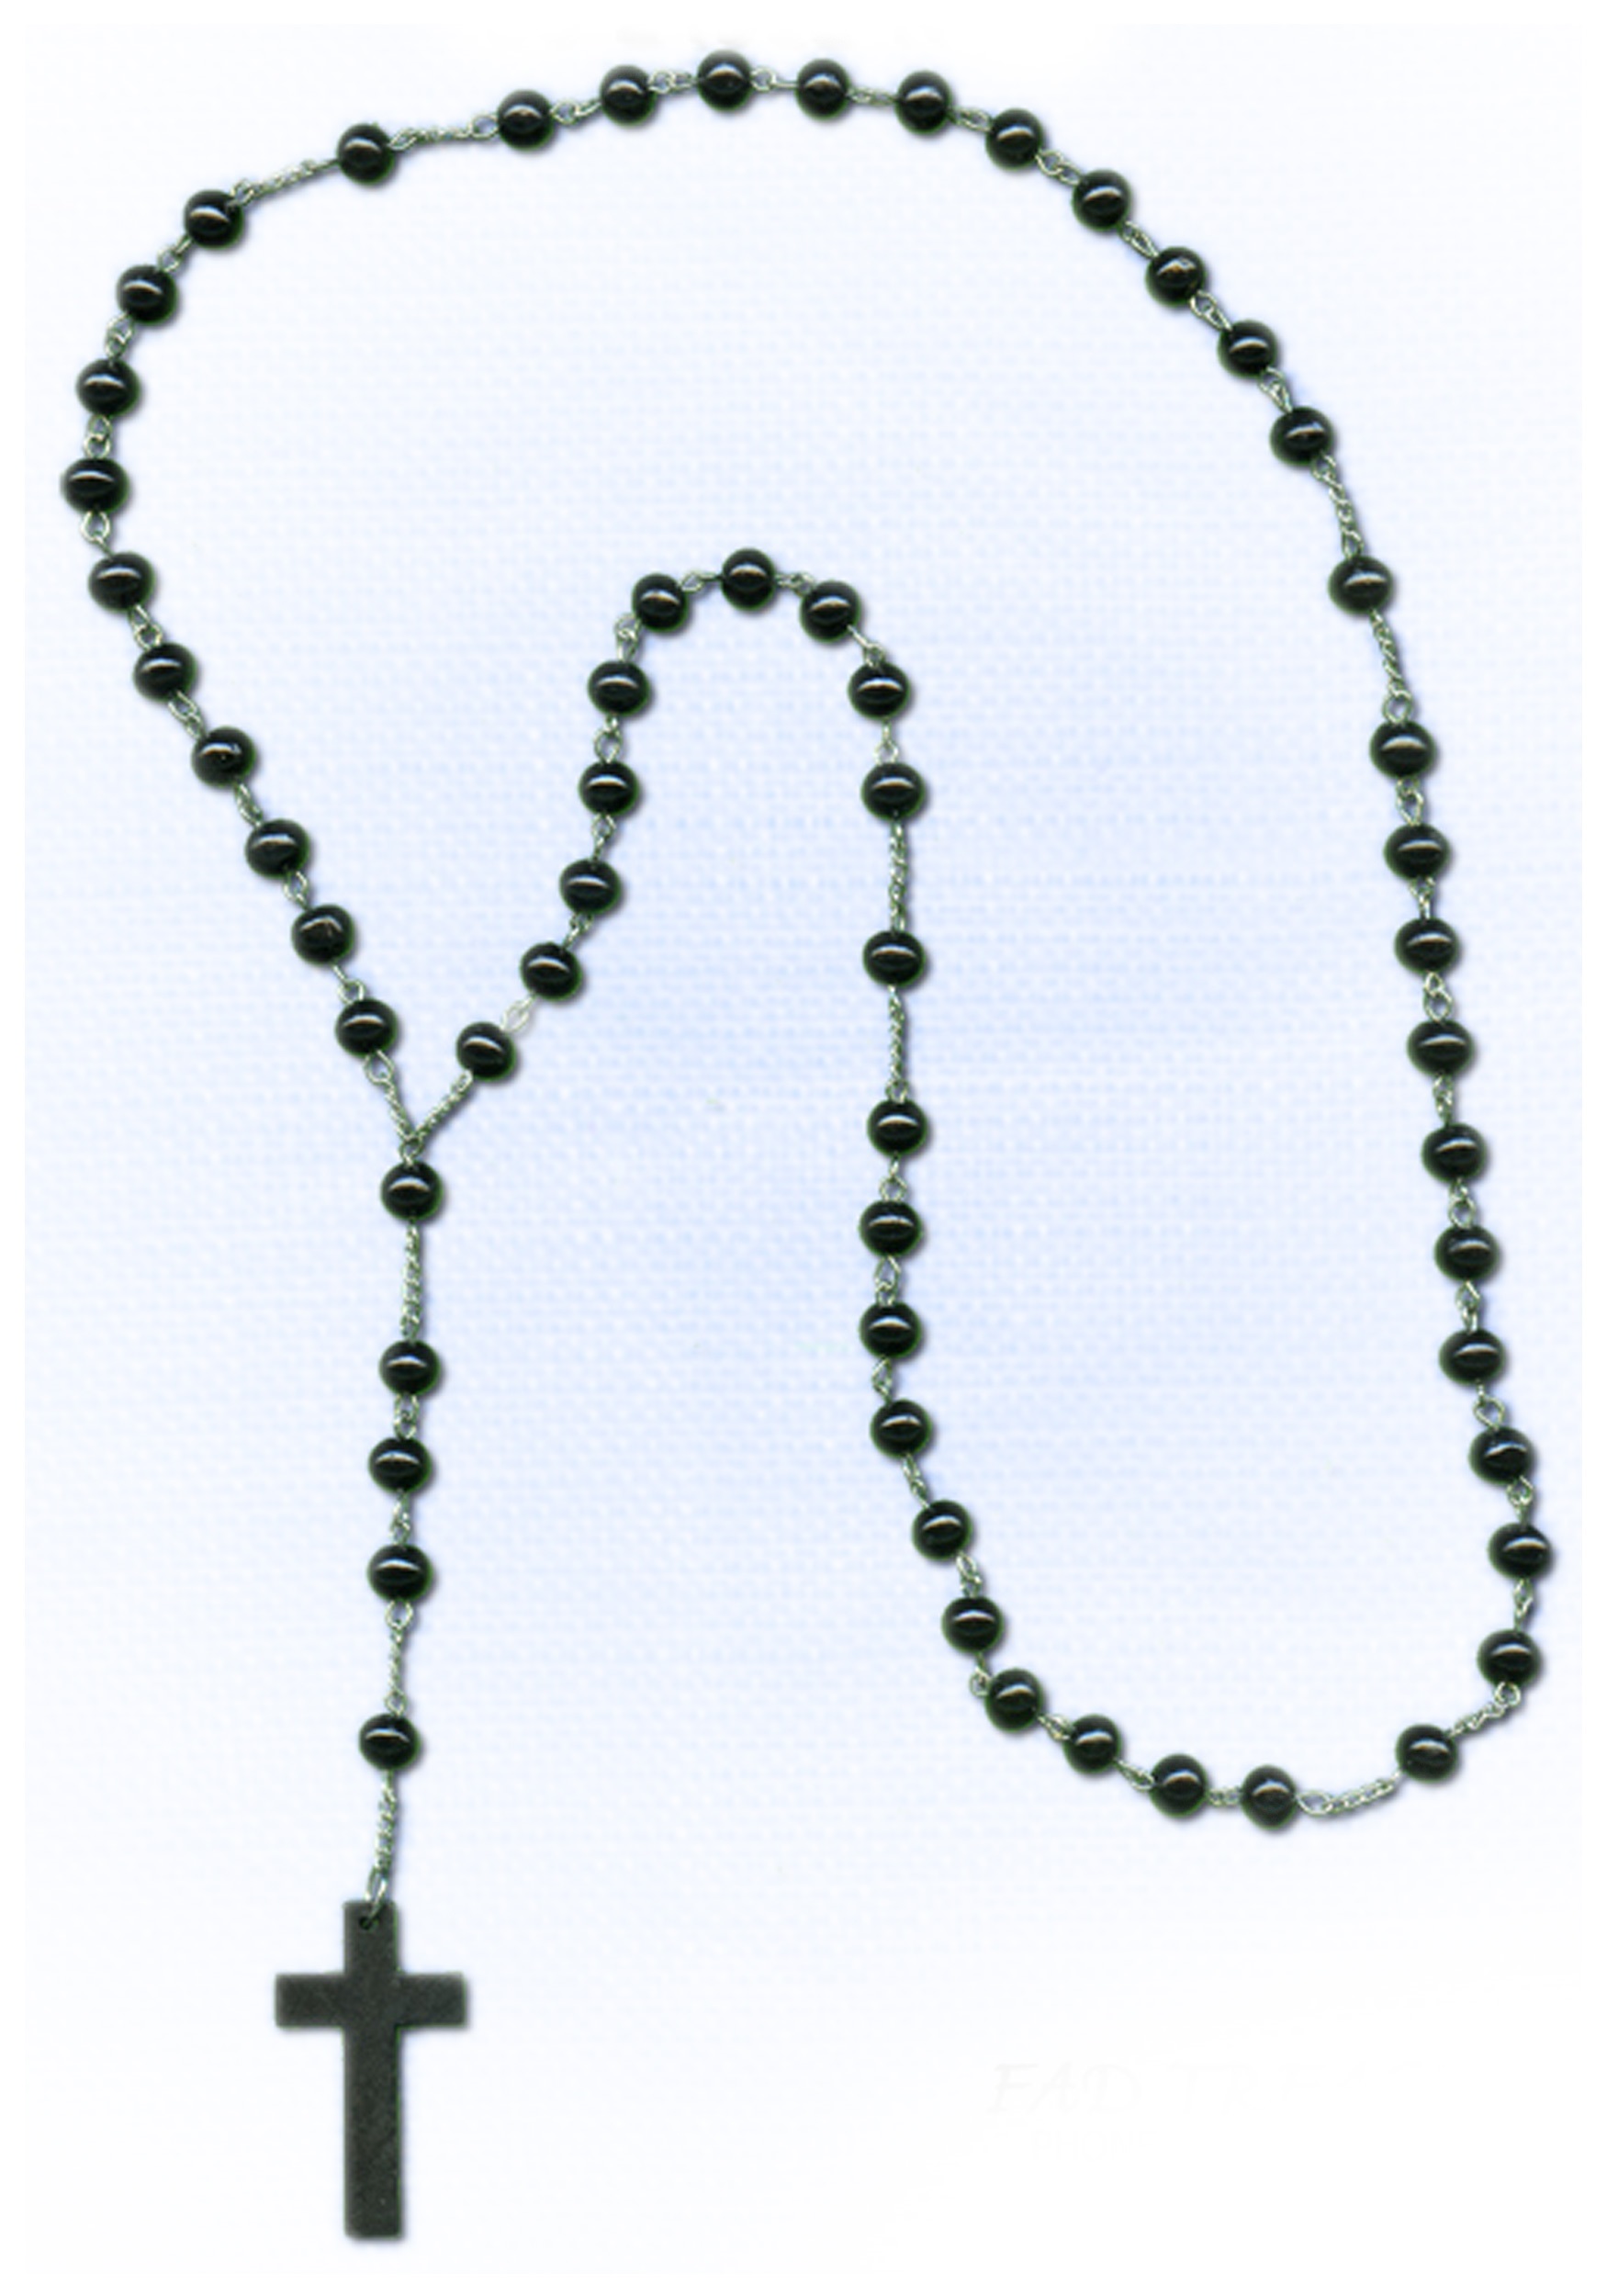 Crucifix clipart rosary bead.